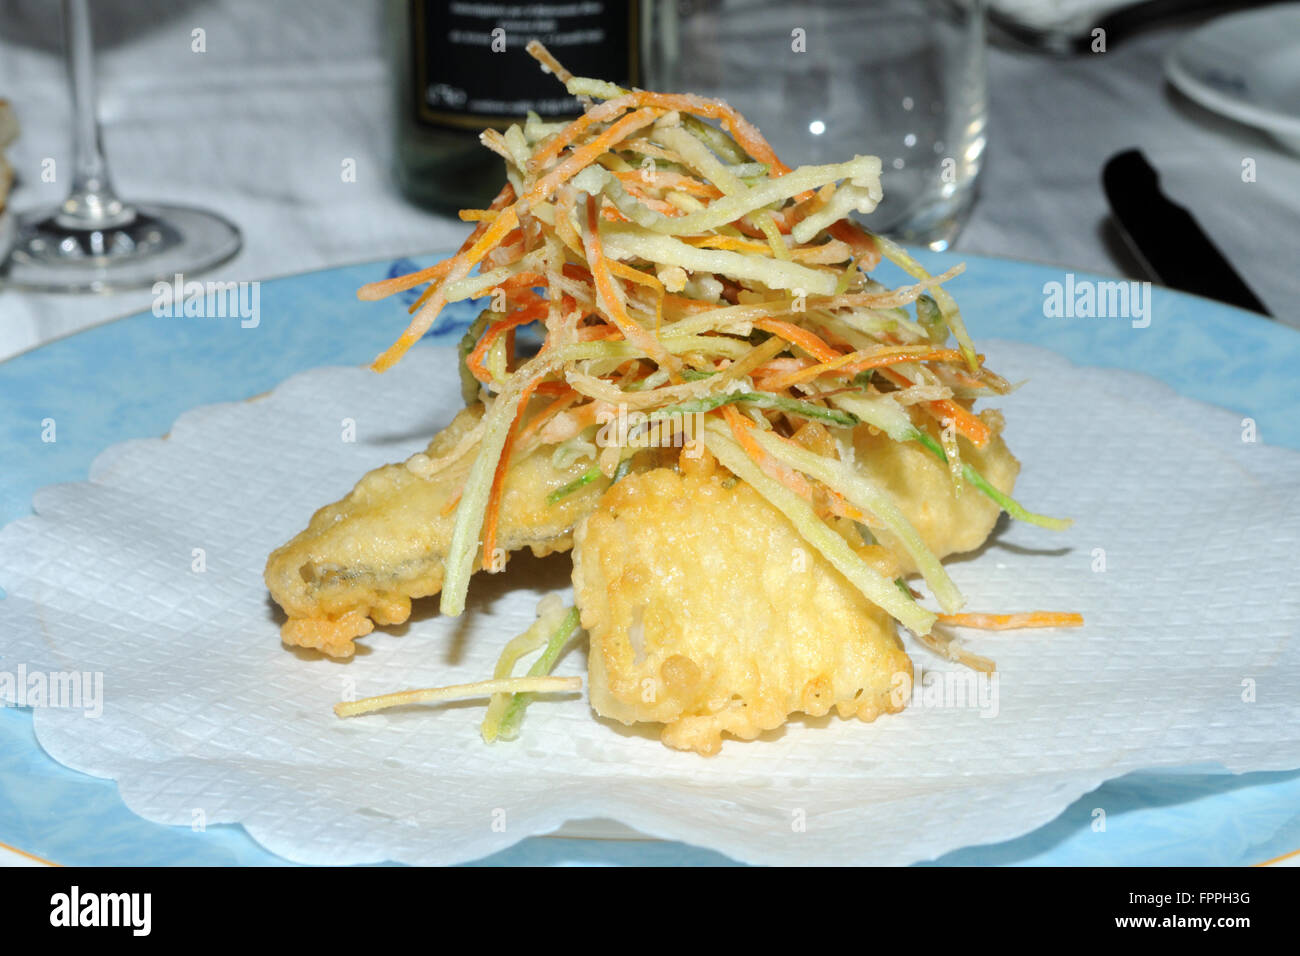 a plate of fried stockfish, typical ligurian plate, Genoa, Ligurian, Italy Stock Photo